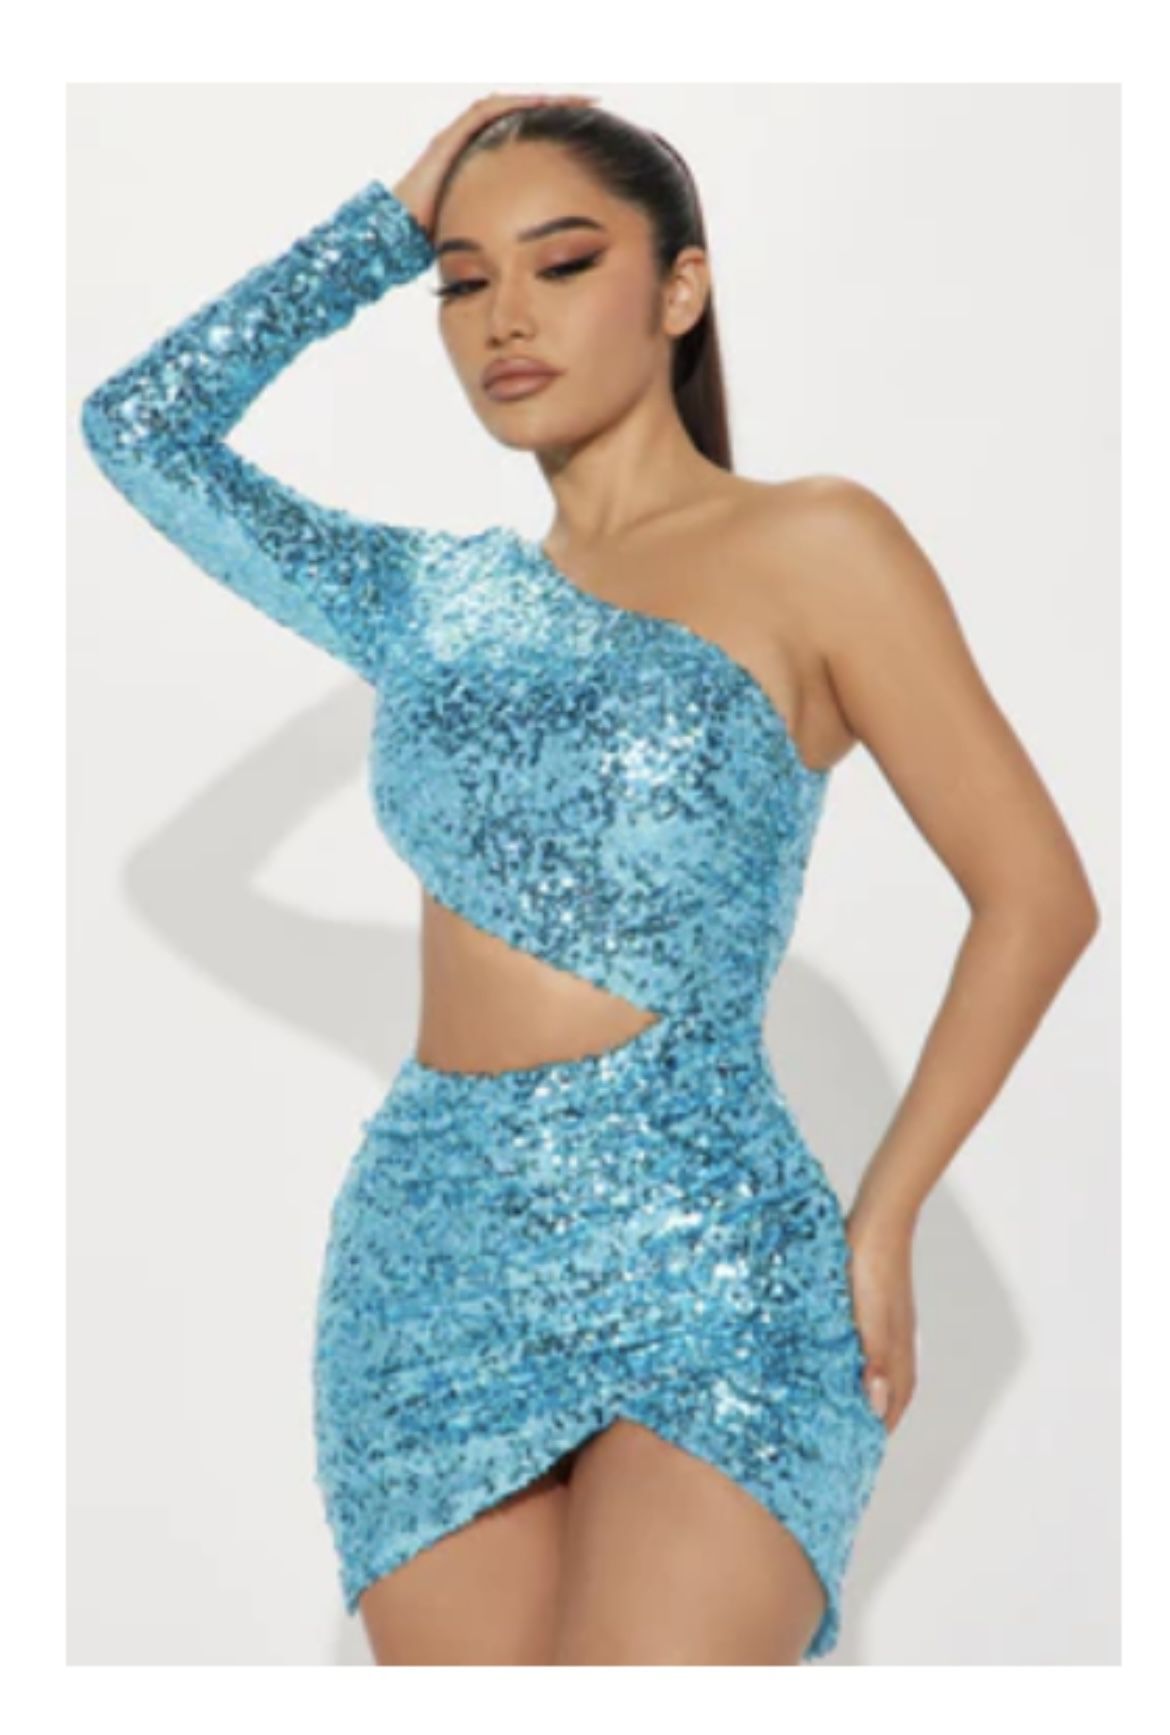 Aqua mini dress